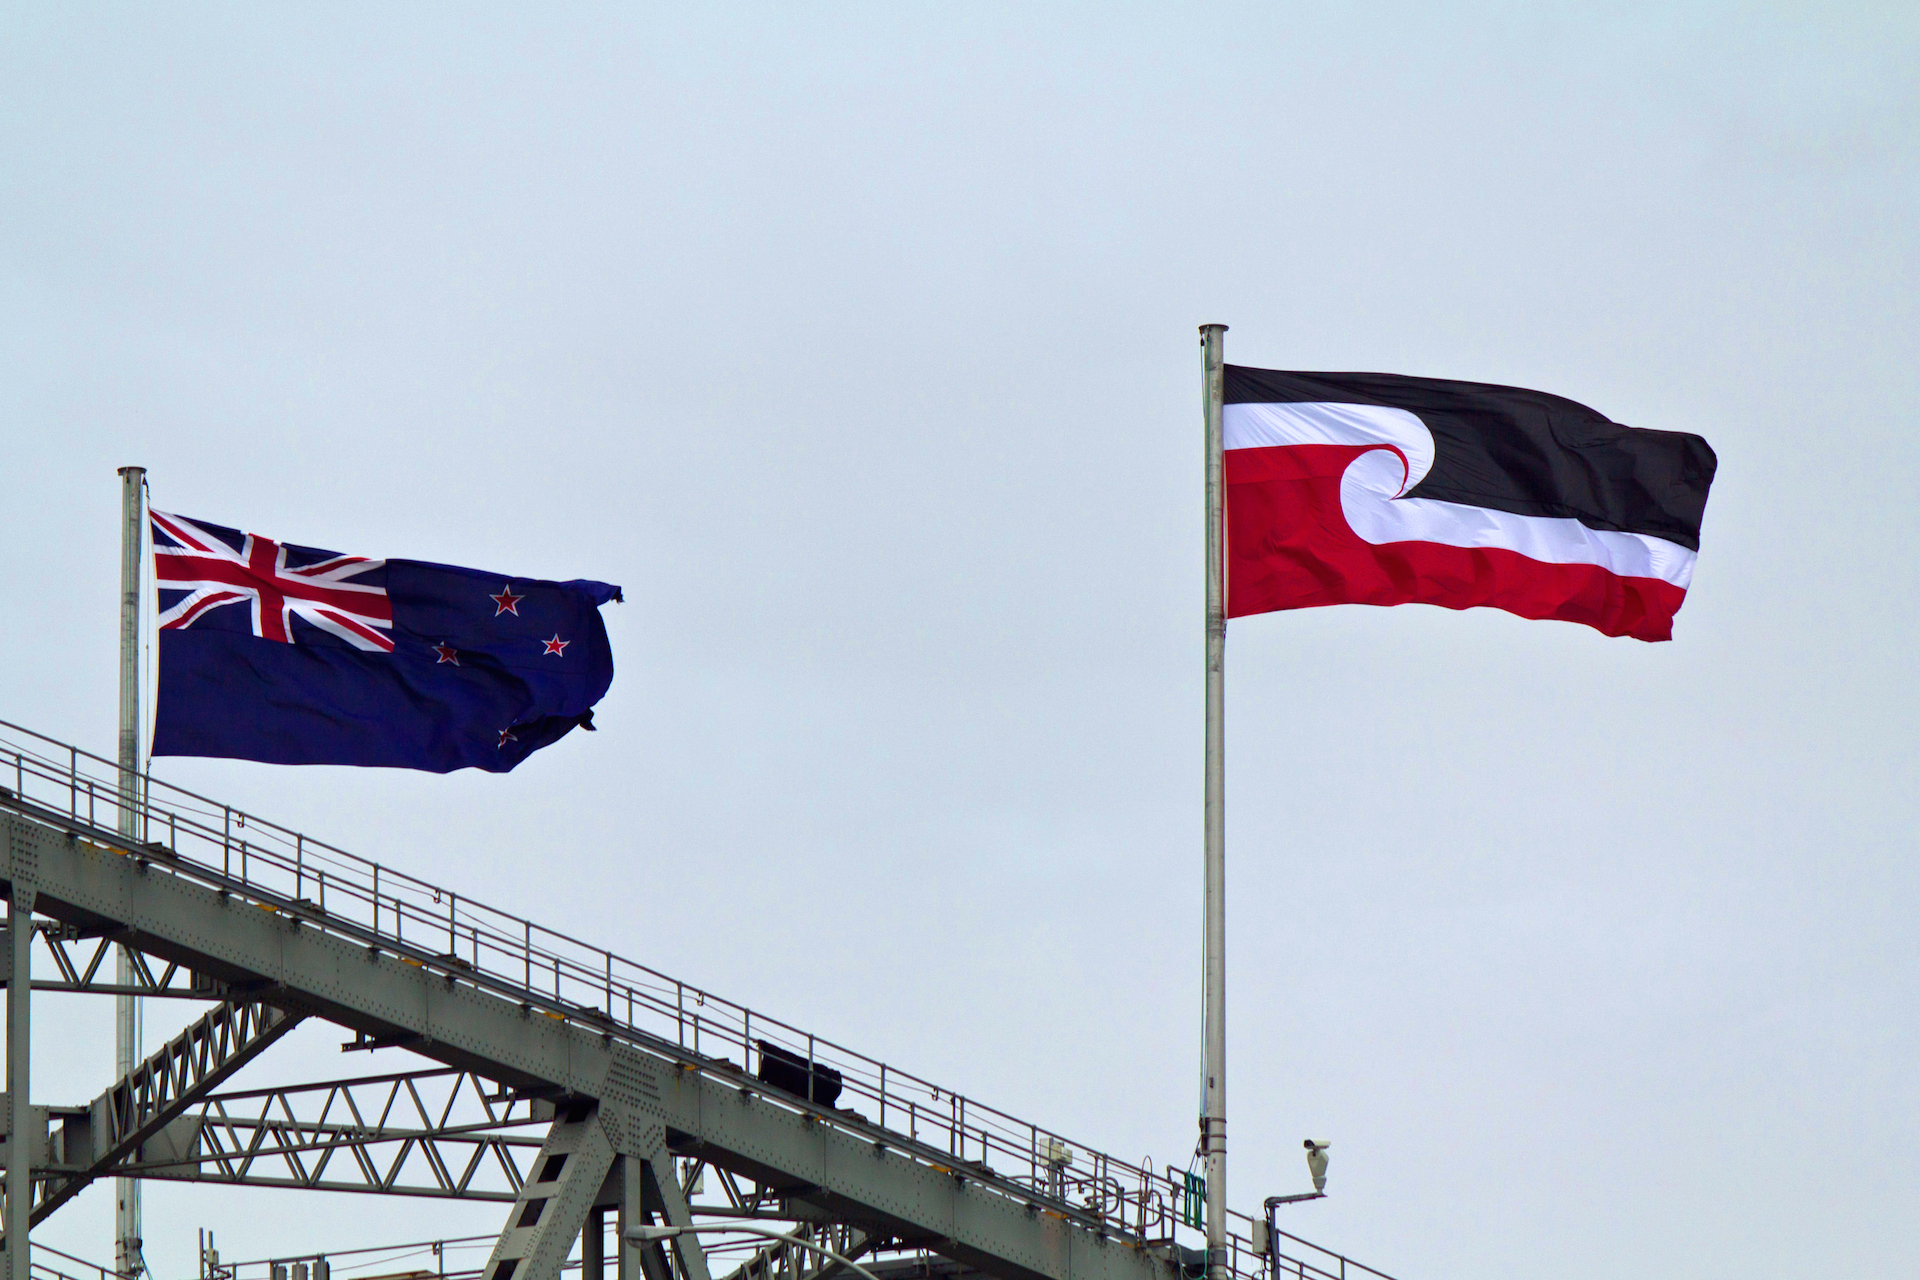 New Zealand's flag flies on top of Auckland's harbour bridge alongside the Tino Rangatiratanga flag.